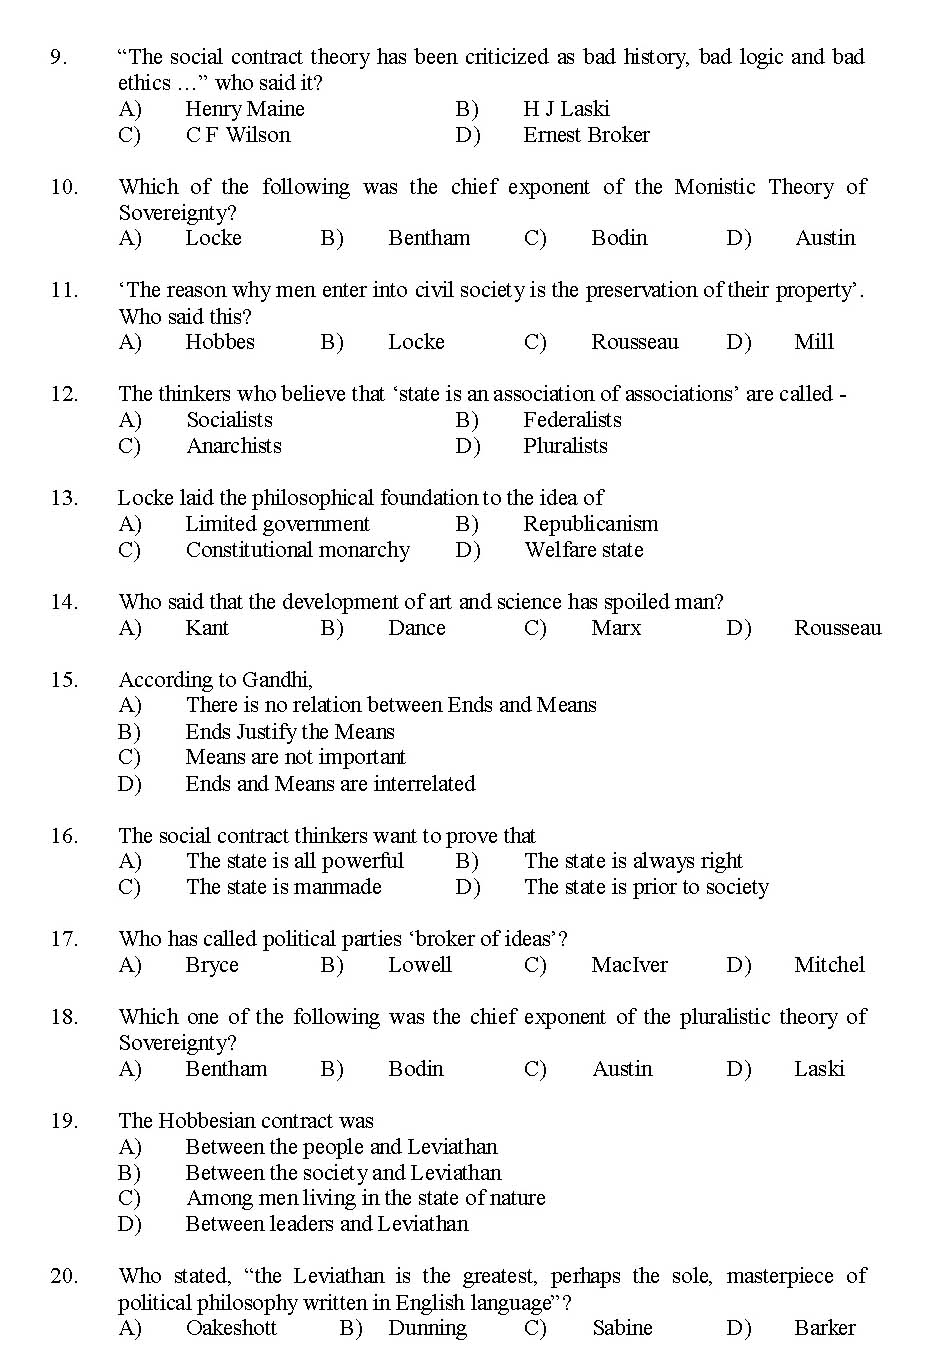 Kerala SET Political Science Exam 2014 Question Code 14225 2